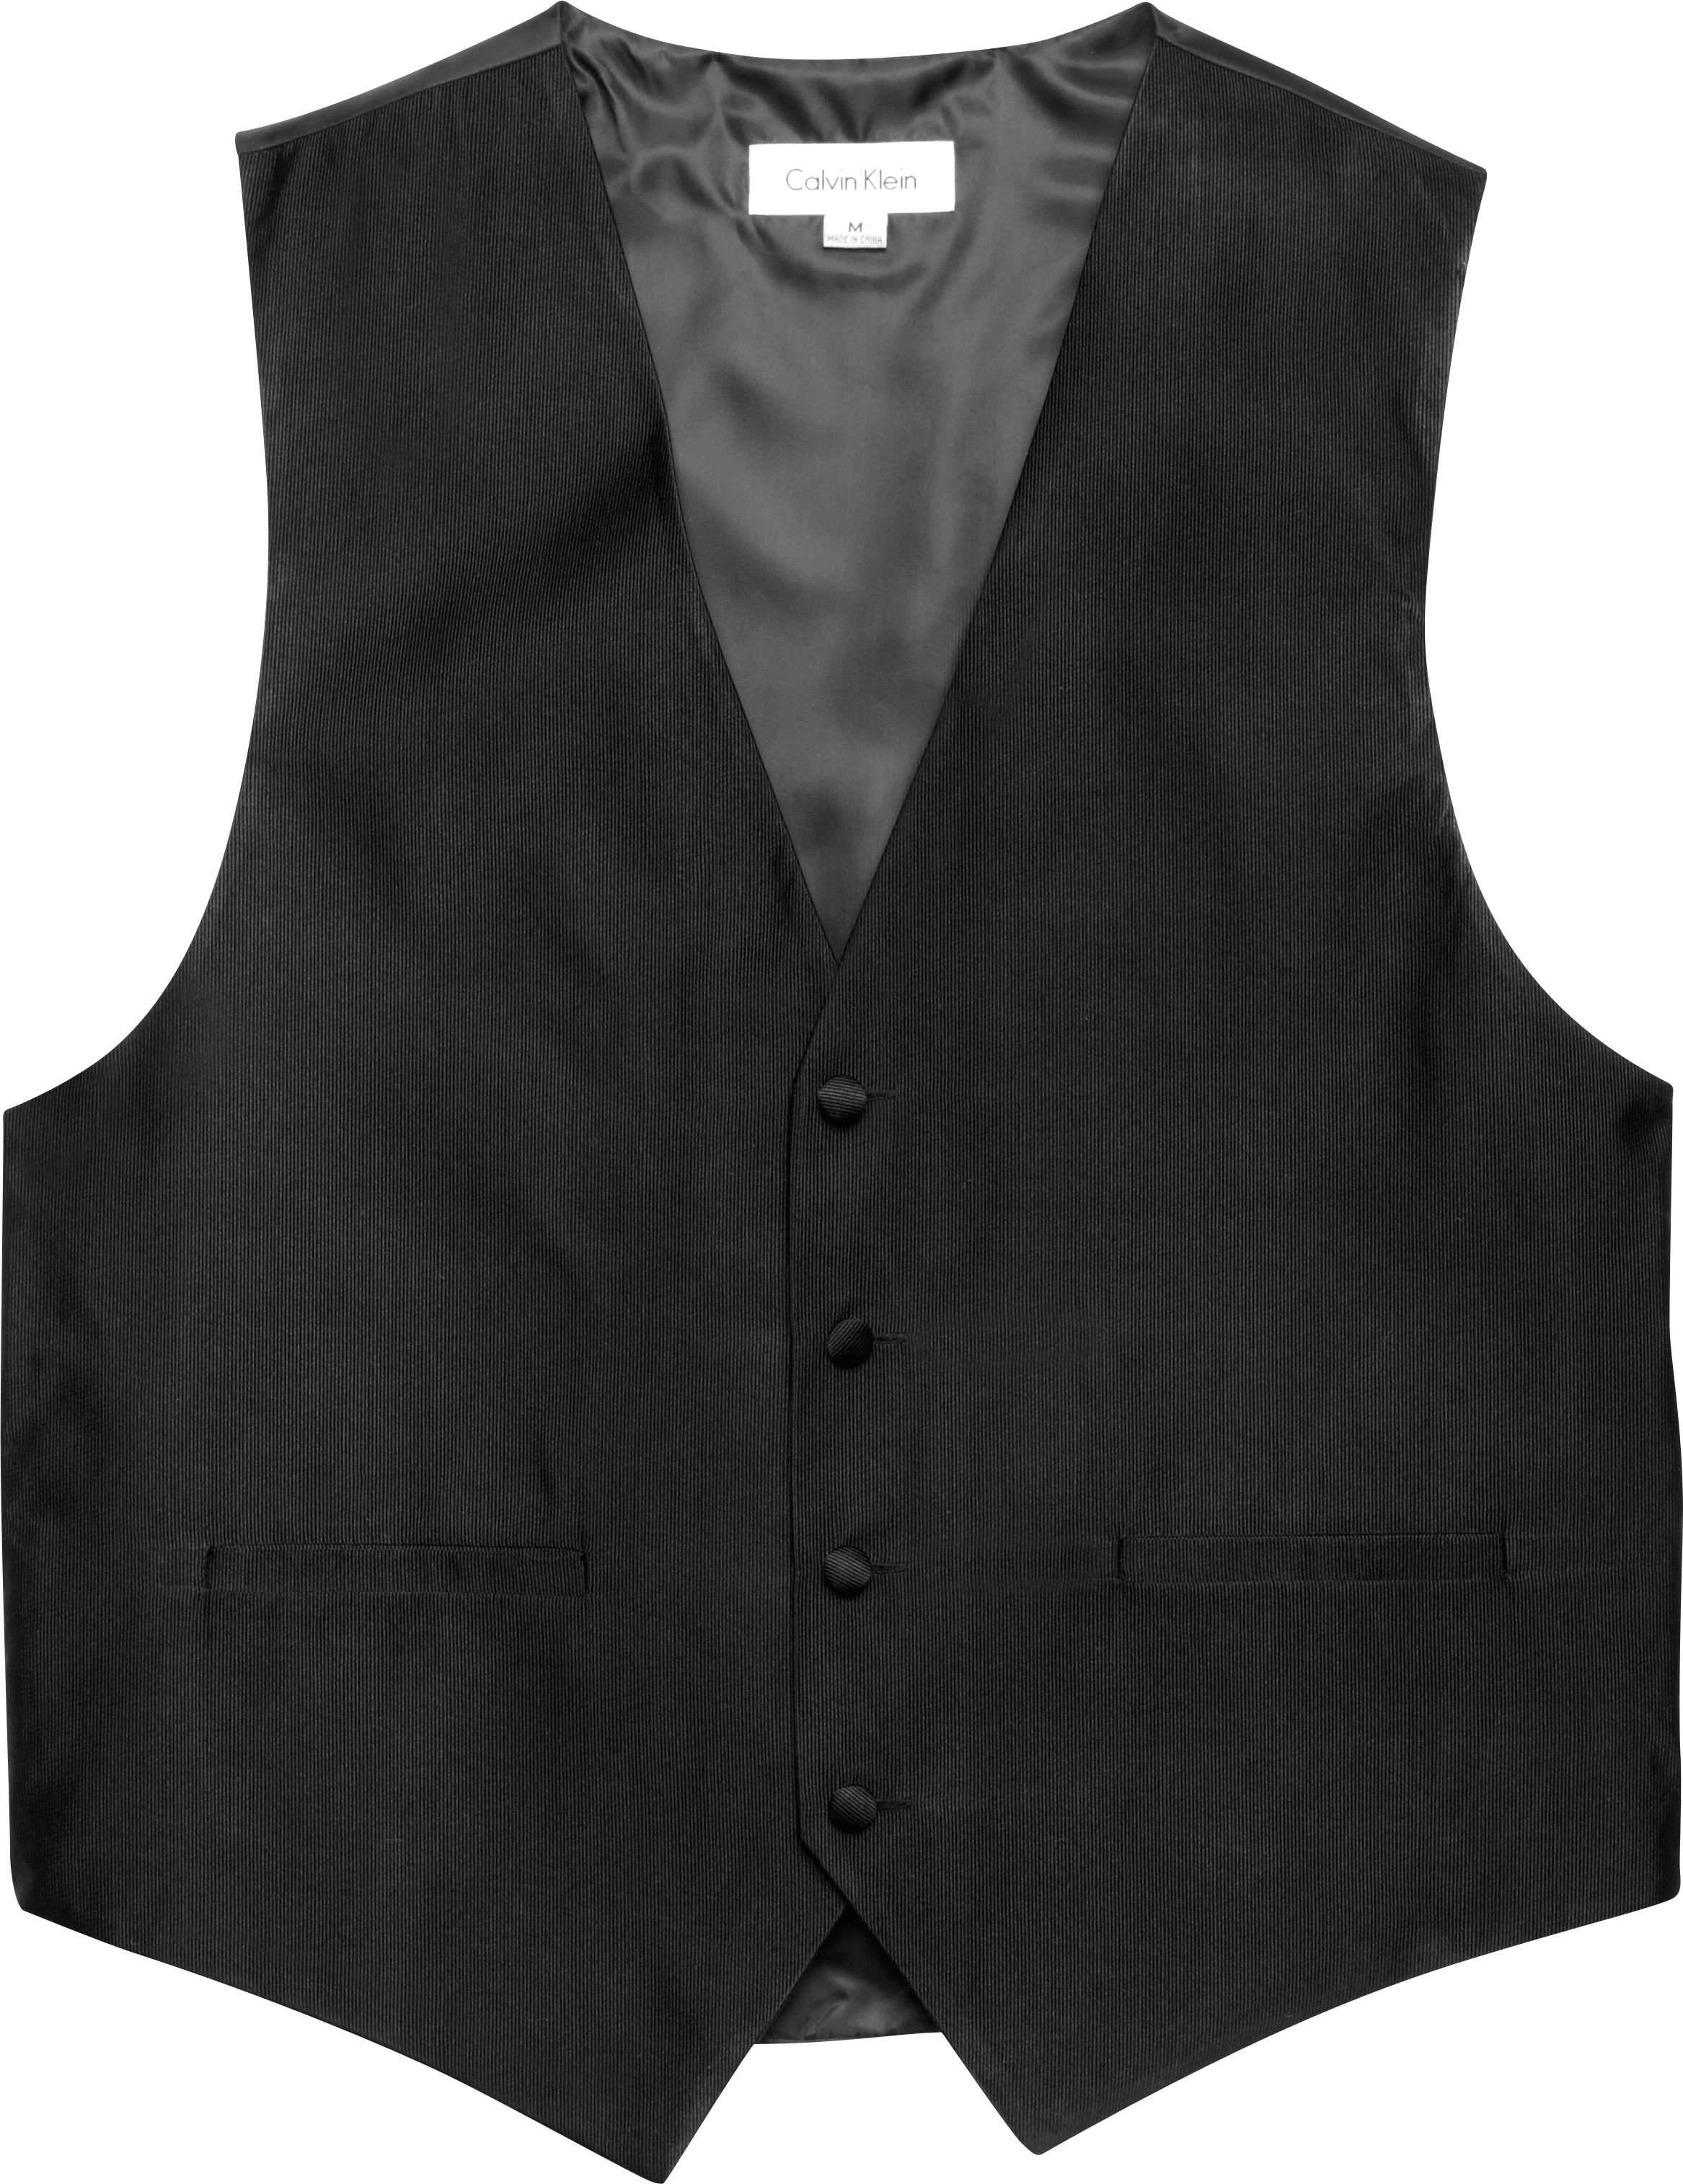 Klein Black Formal Vest - Men's Suits Men's